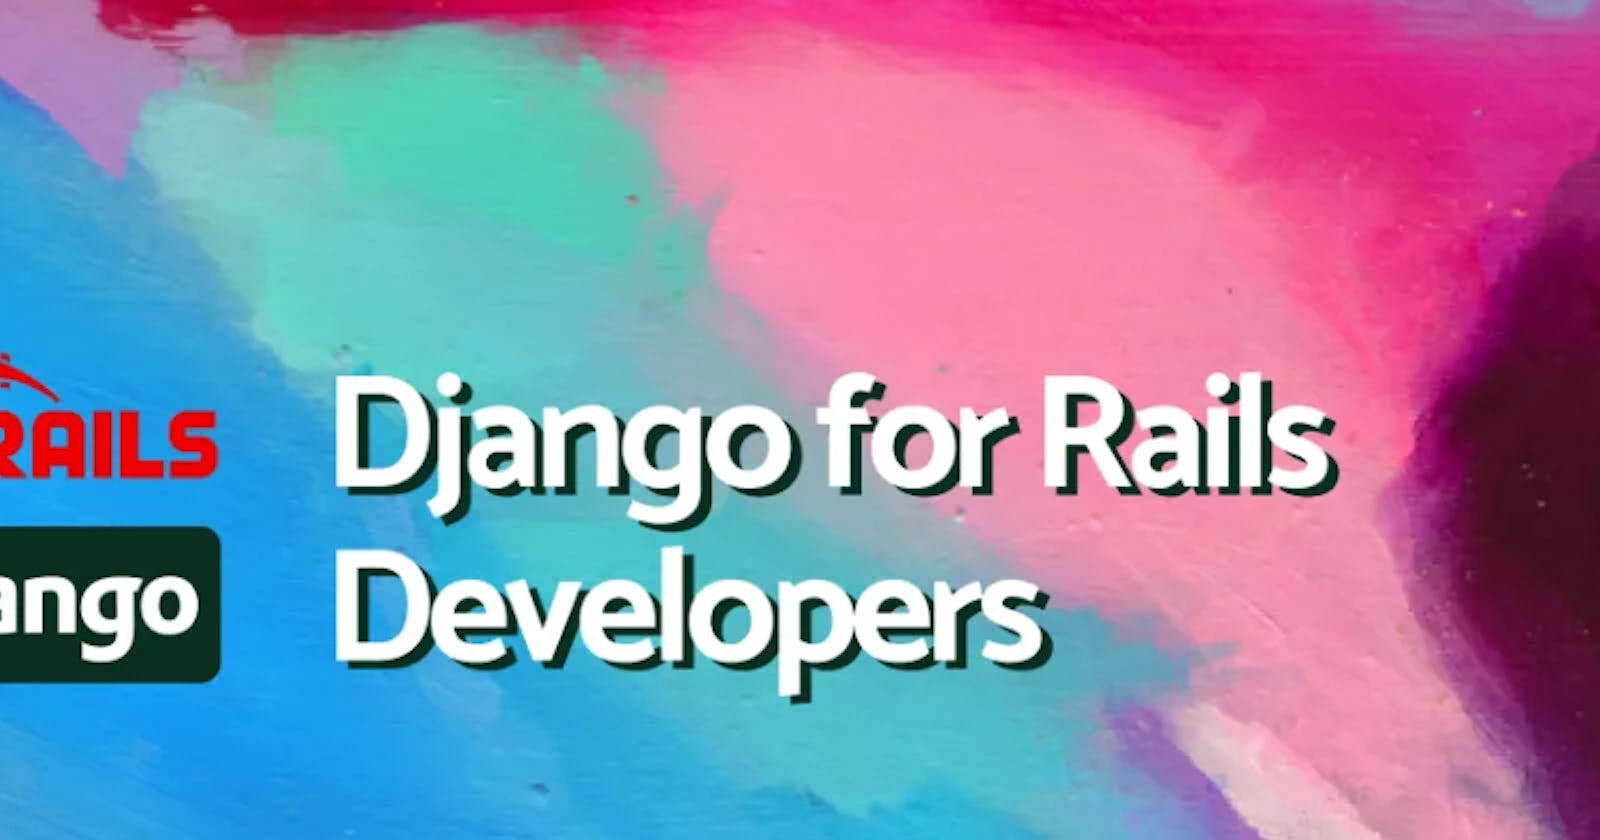 Django for Rails Developers